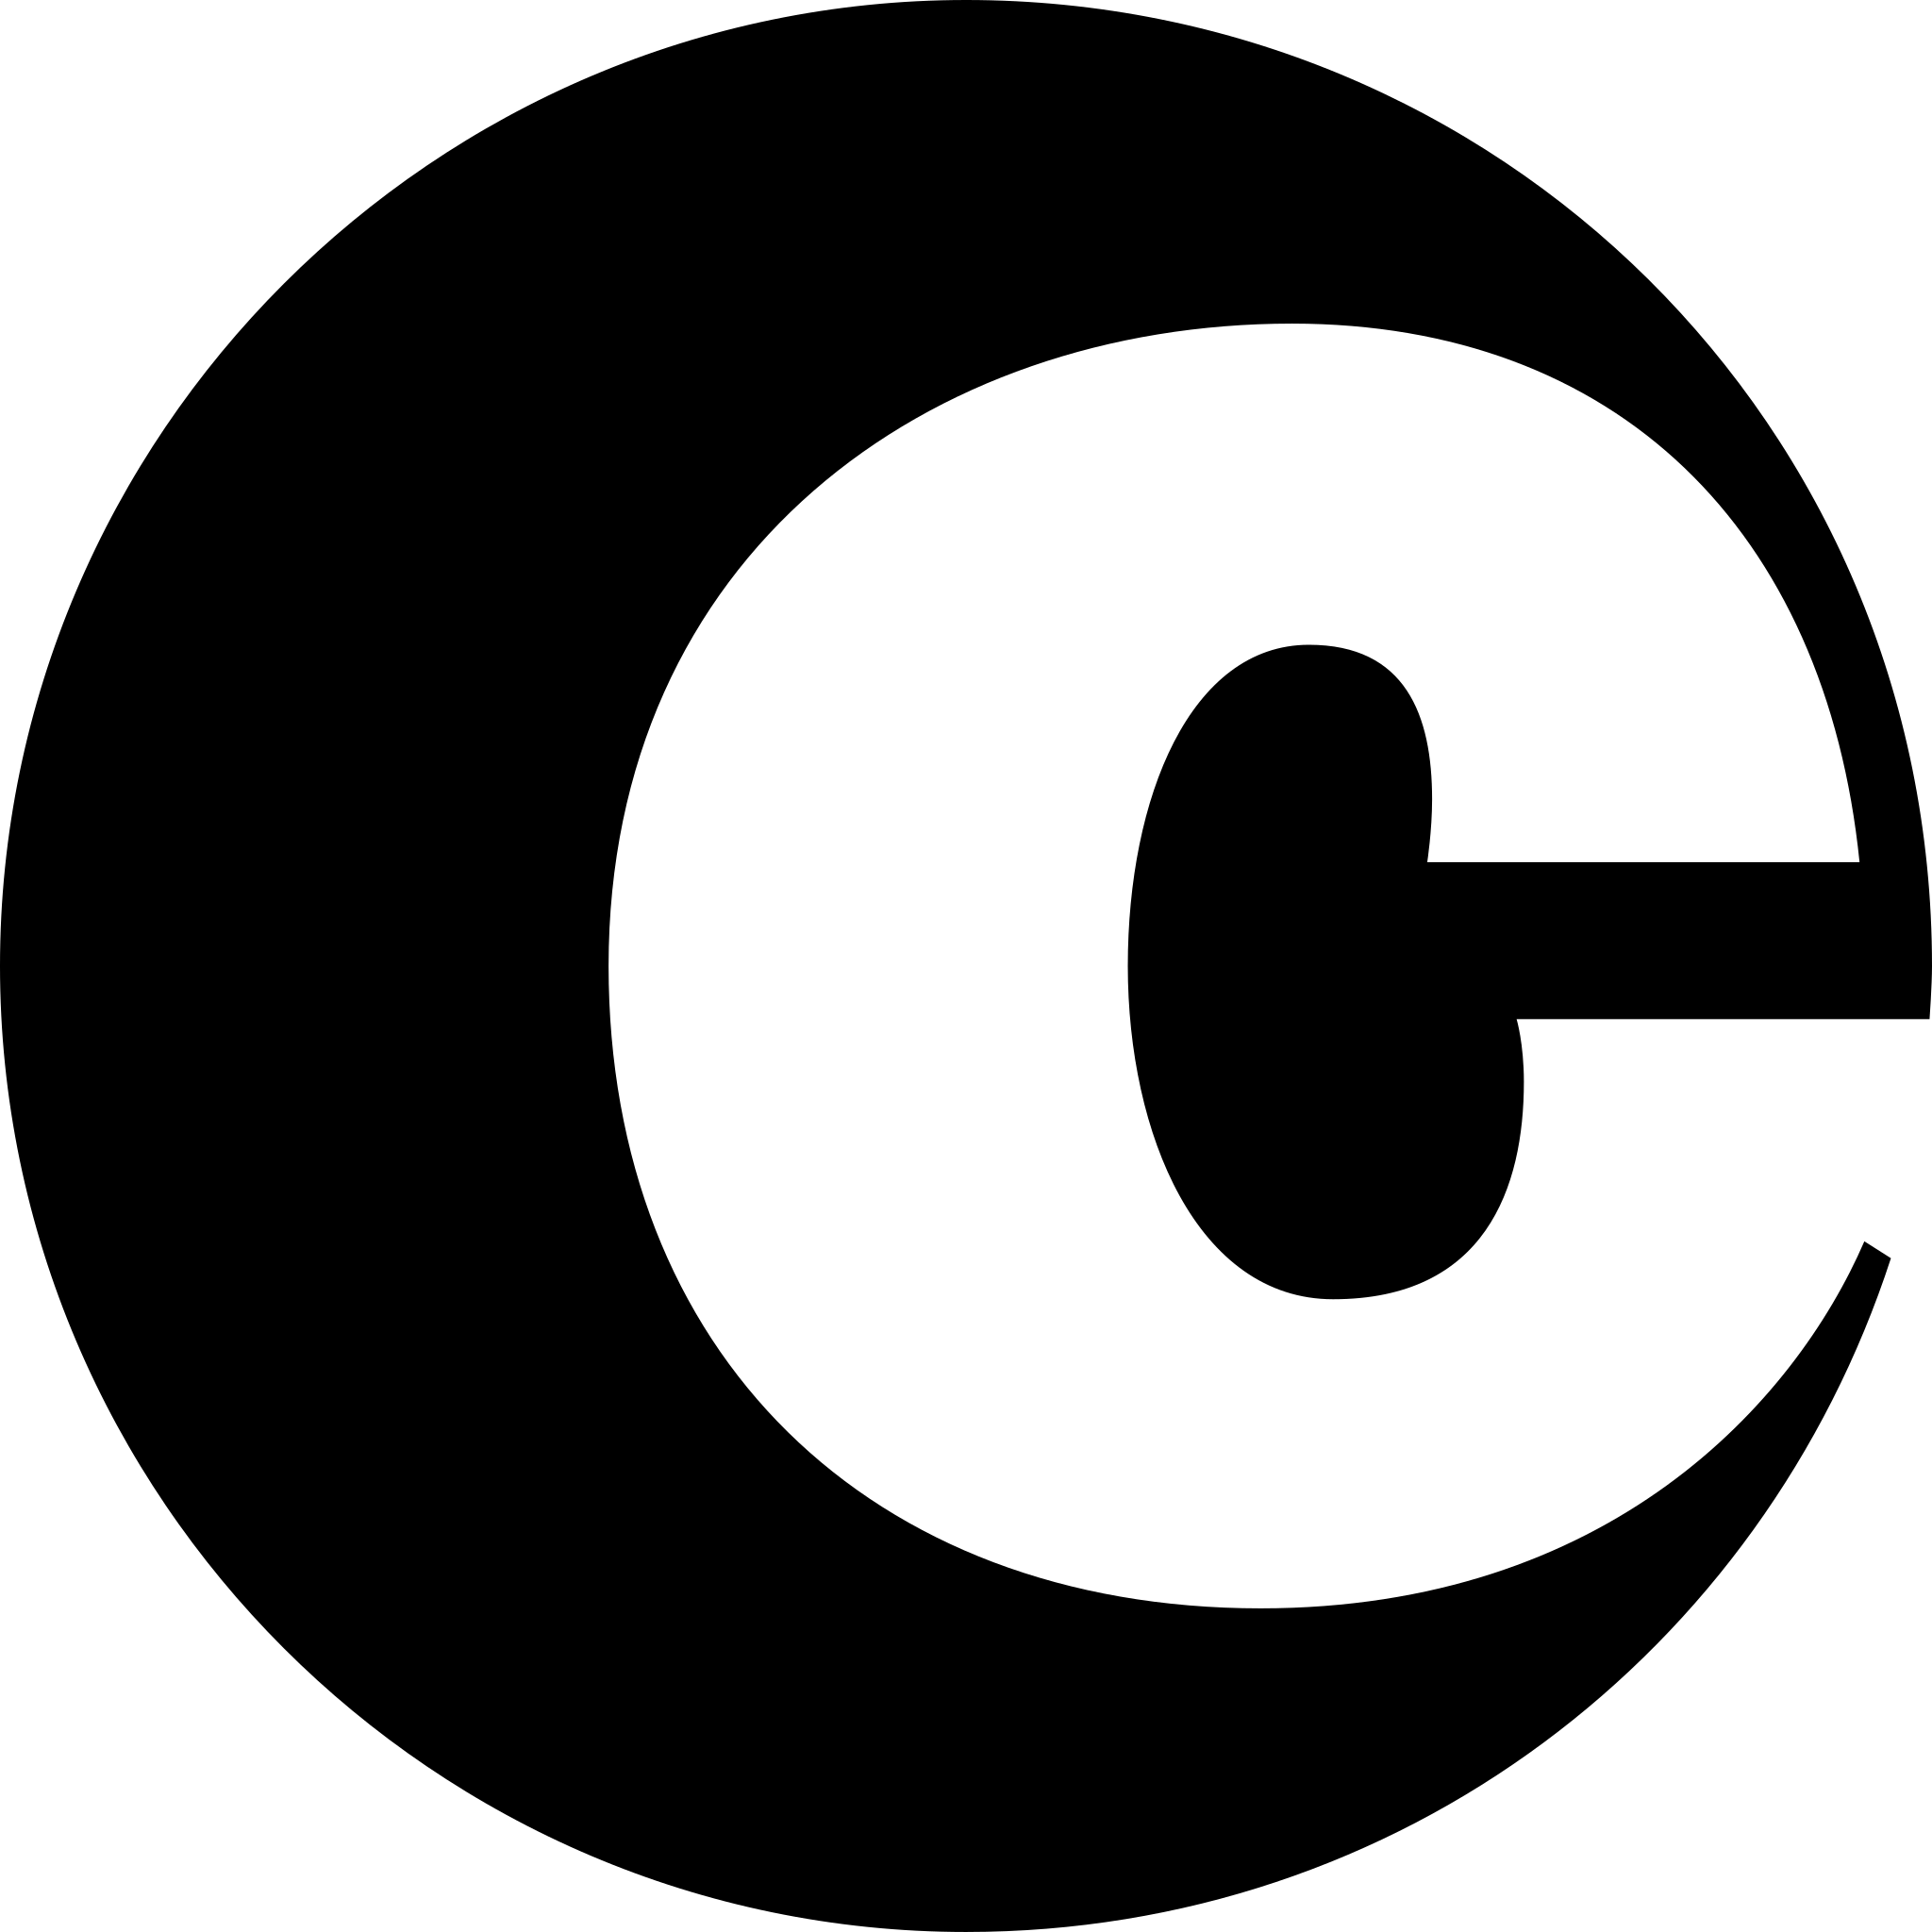 File:Olfa Corporation company logo.svg - Wikipedia